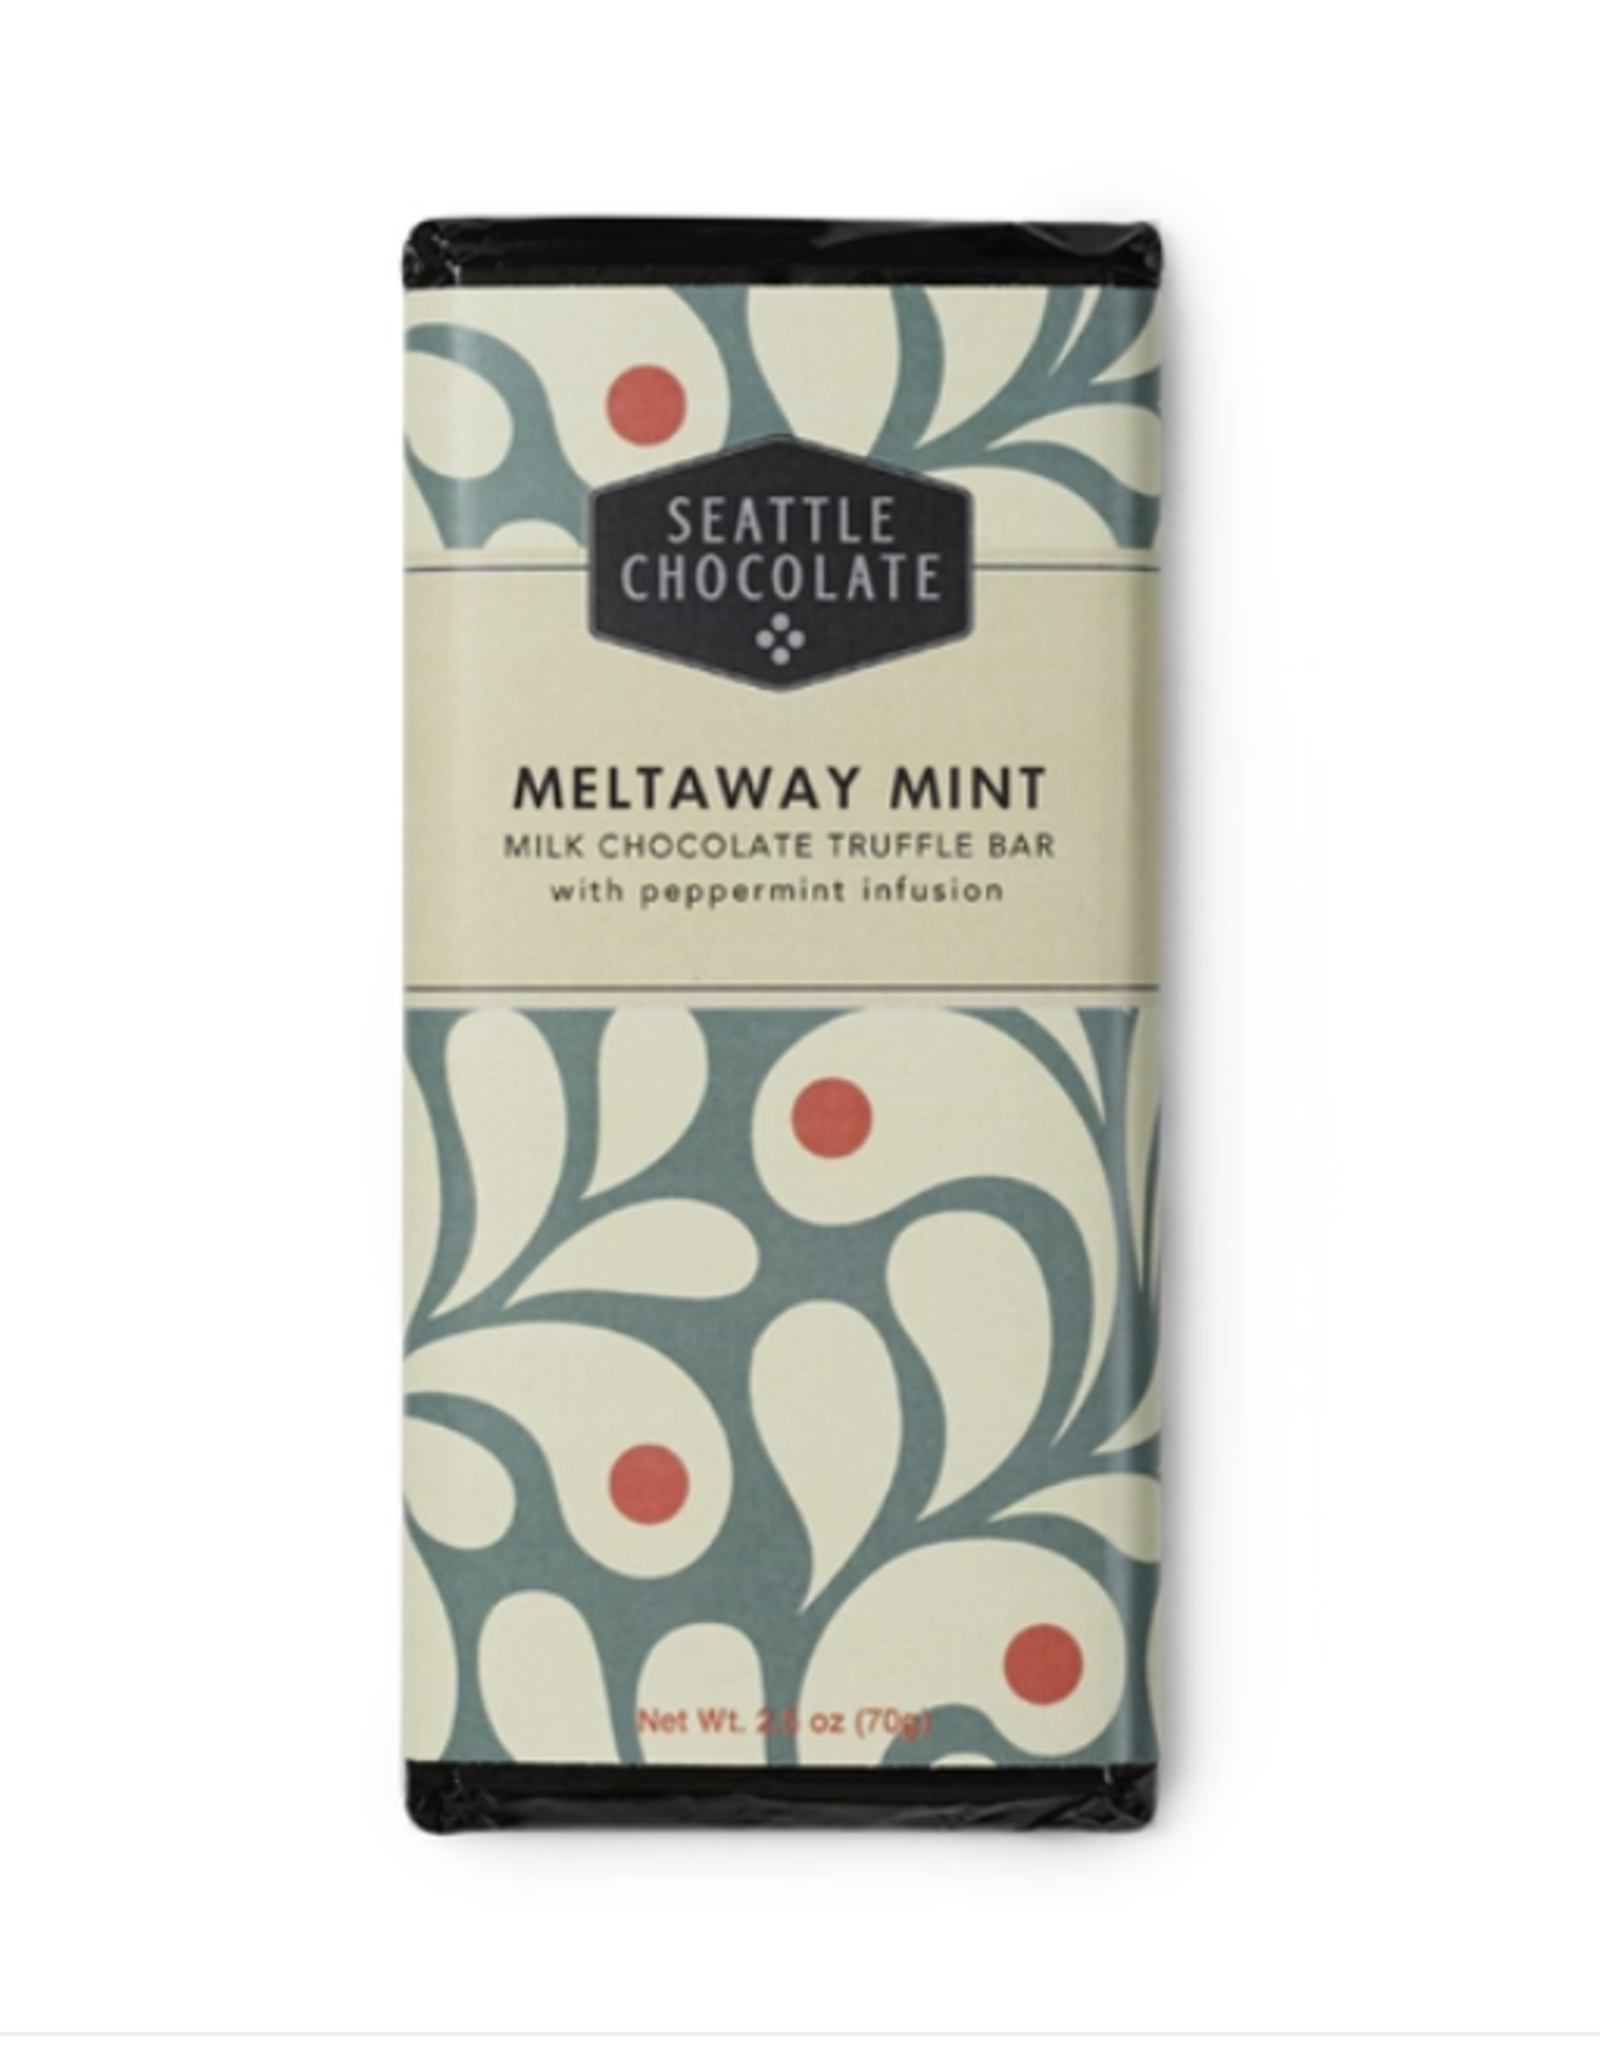 Seattle Chocolate Meltaway Mint Truffle Bar